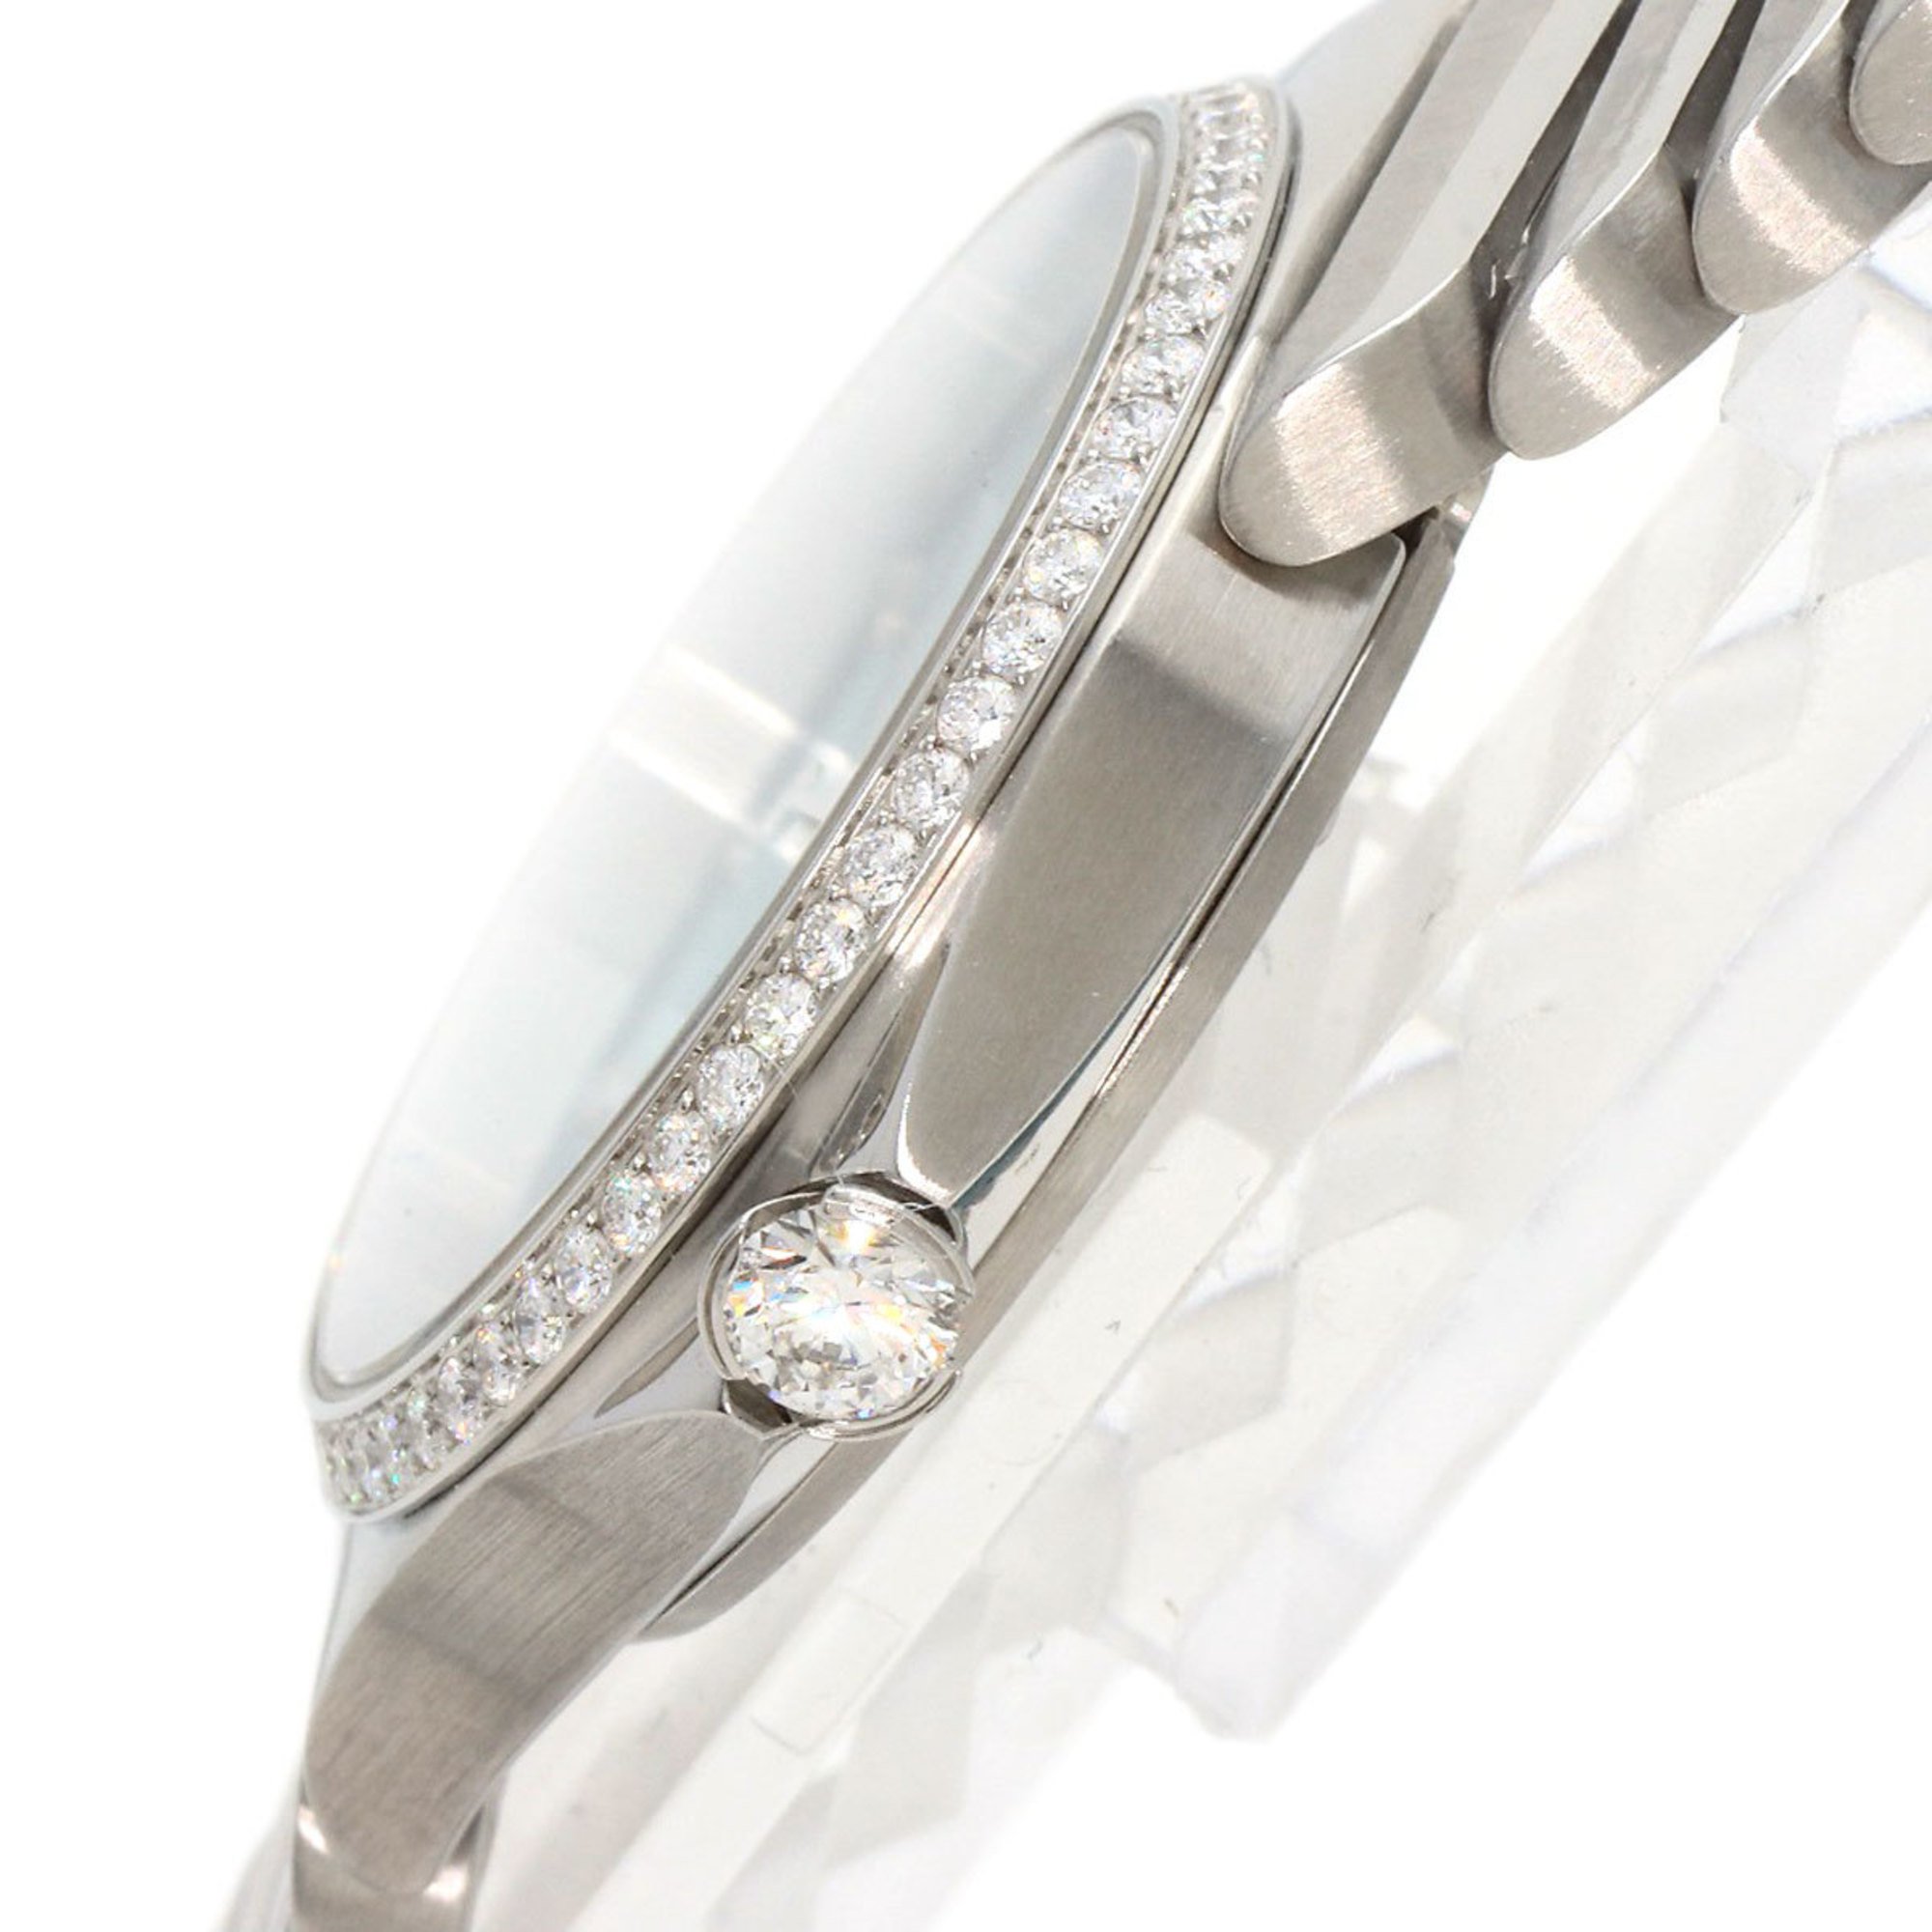 Tiffany Metro 2 12P Diamond Watch Stainless Steel/SS Ladies TIFFANY&Co.